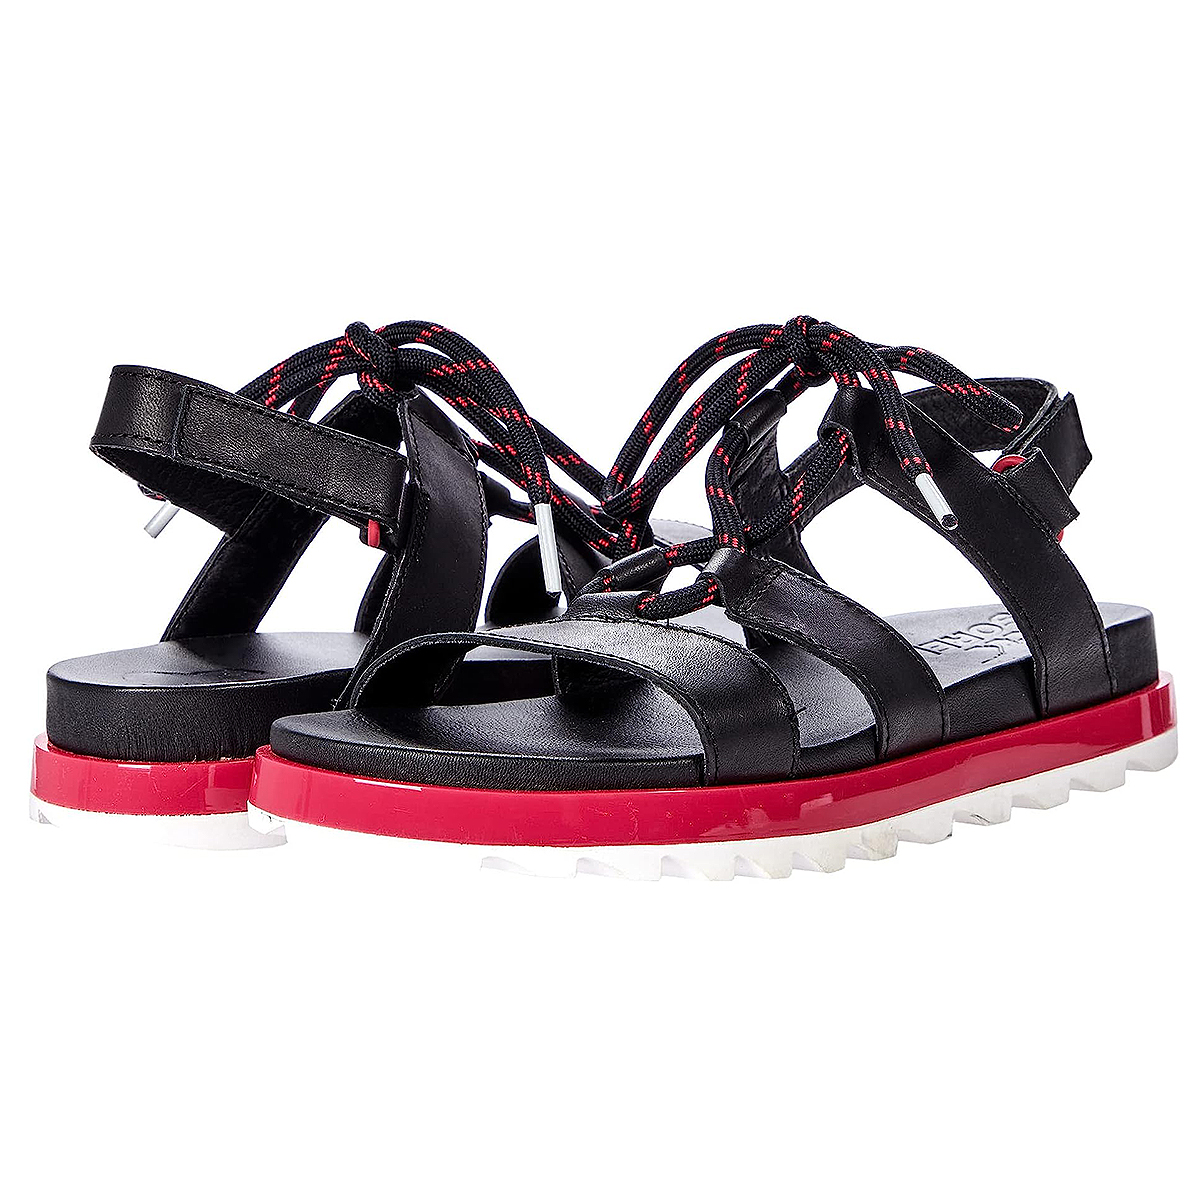 July 4th-fashion-deals-zappos-sorel-sandals